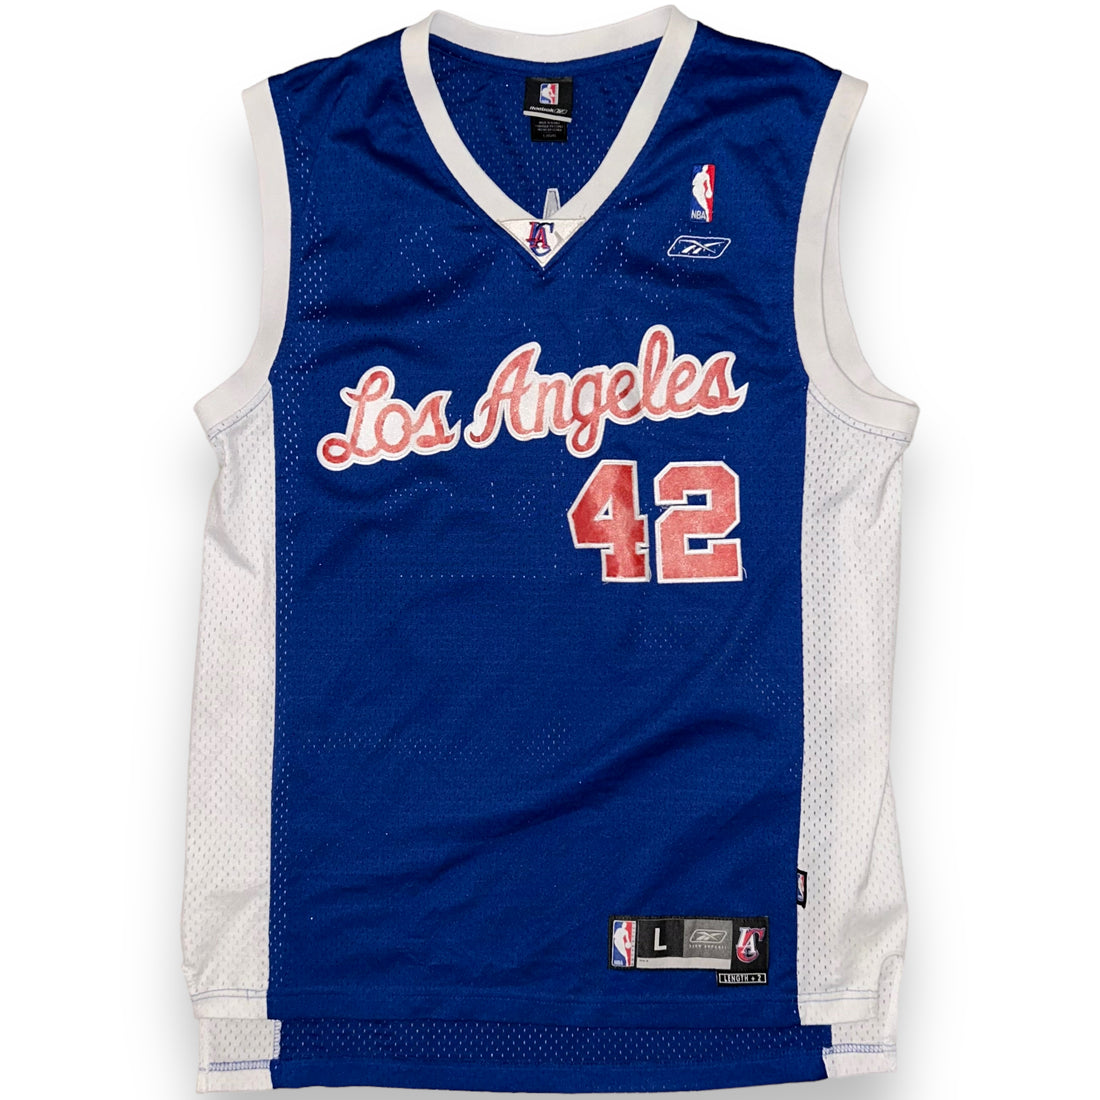 Canottiera Los Angeles Clippers NBA Adidas  (XL)